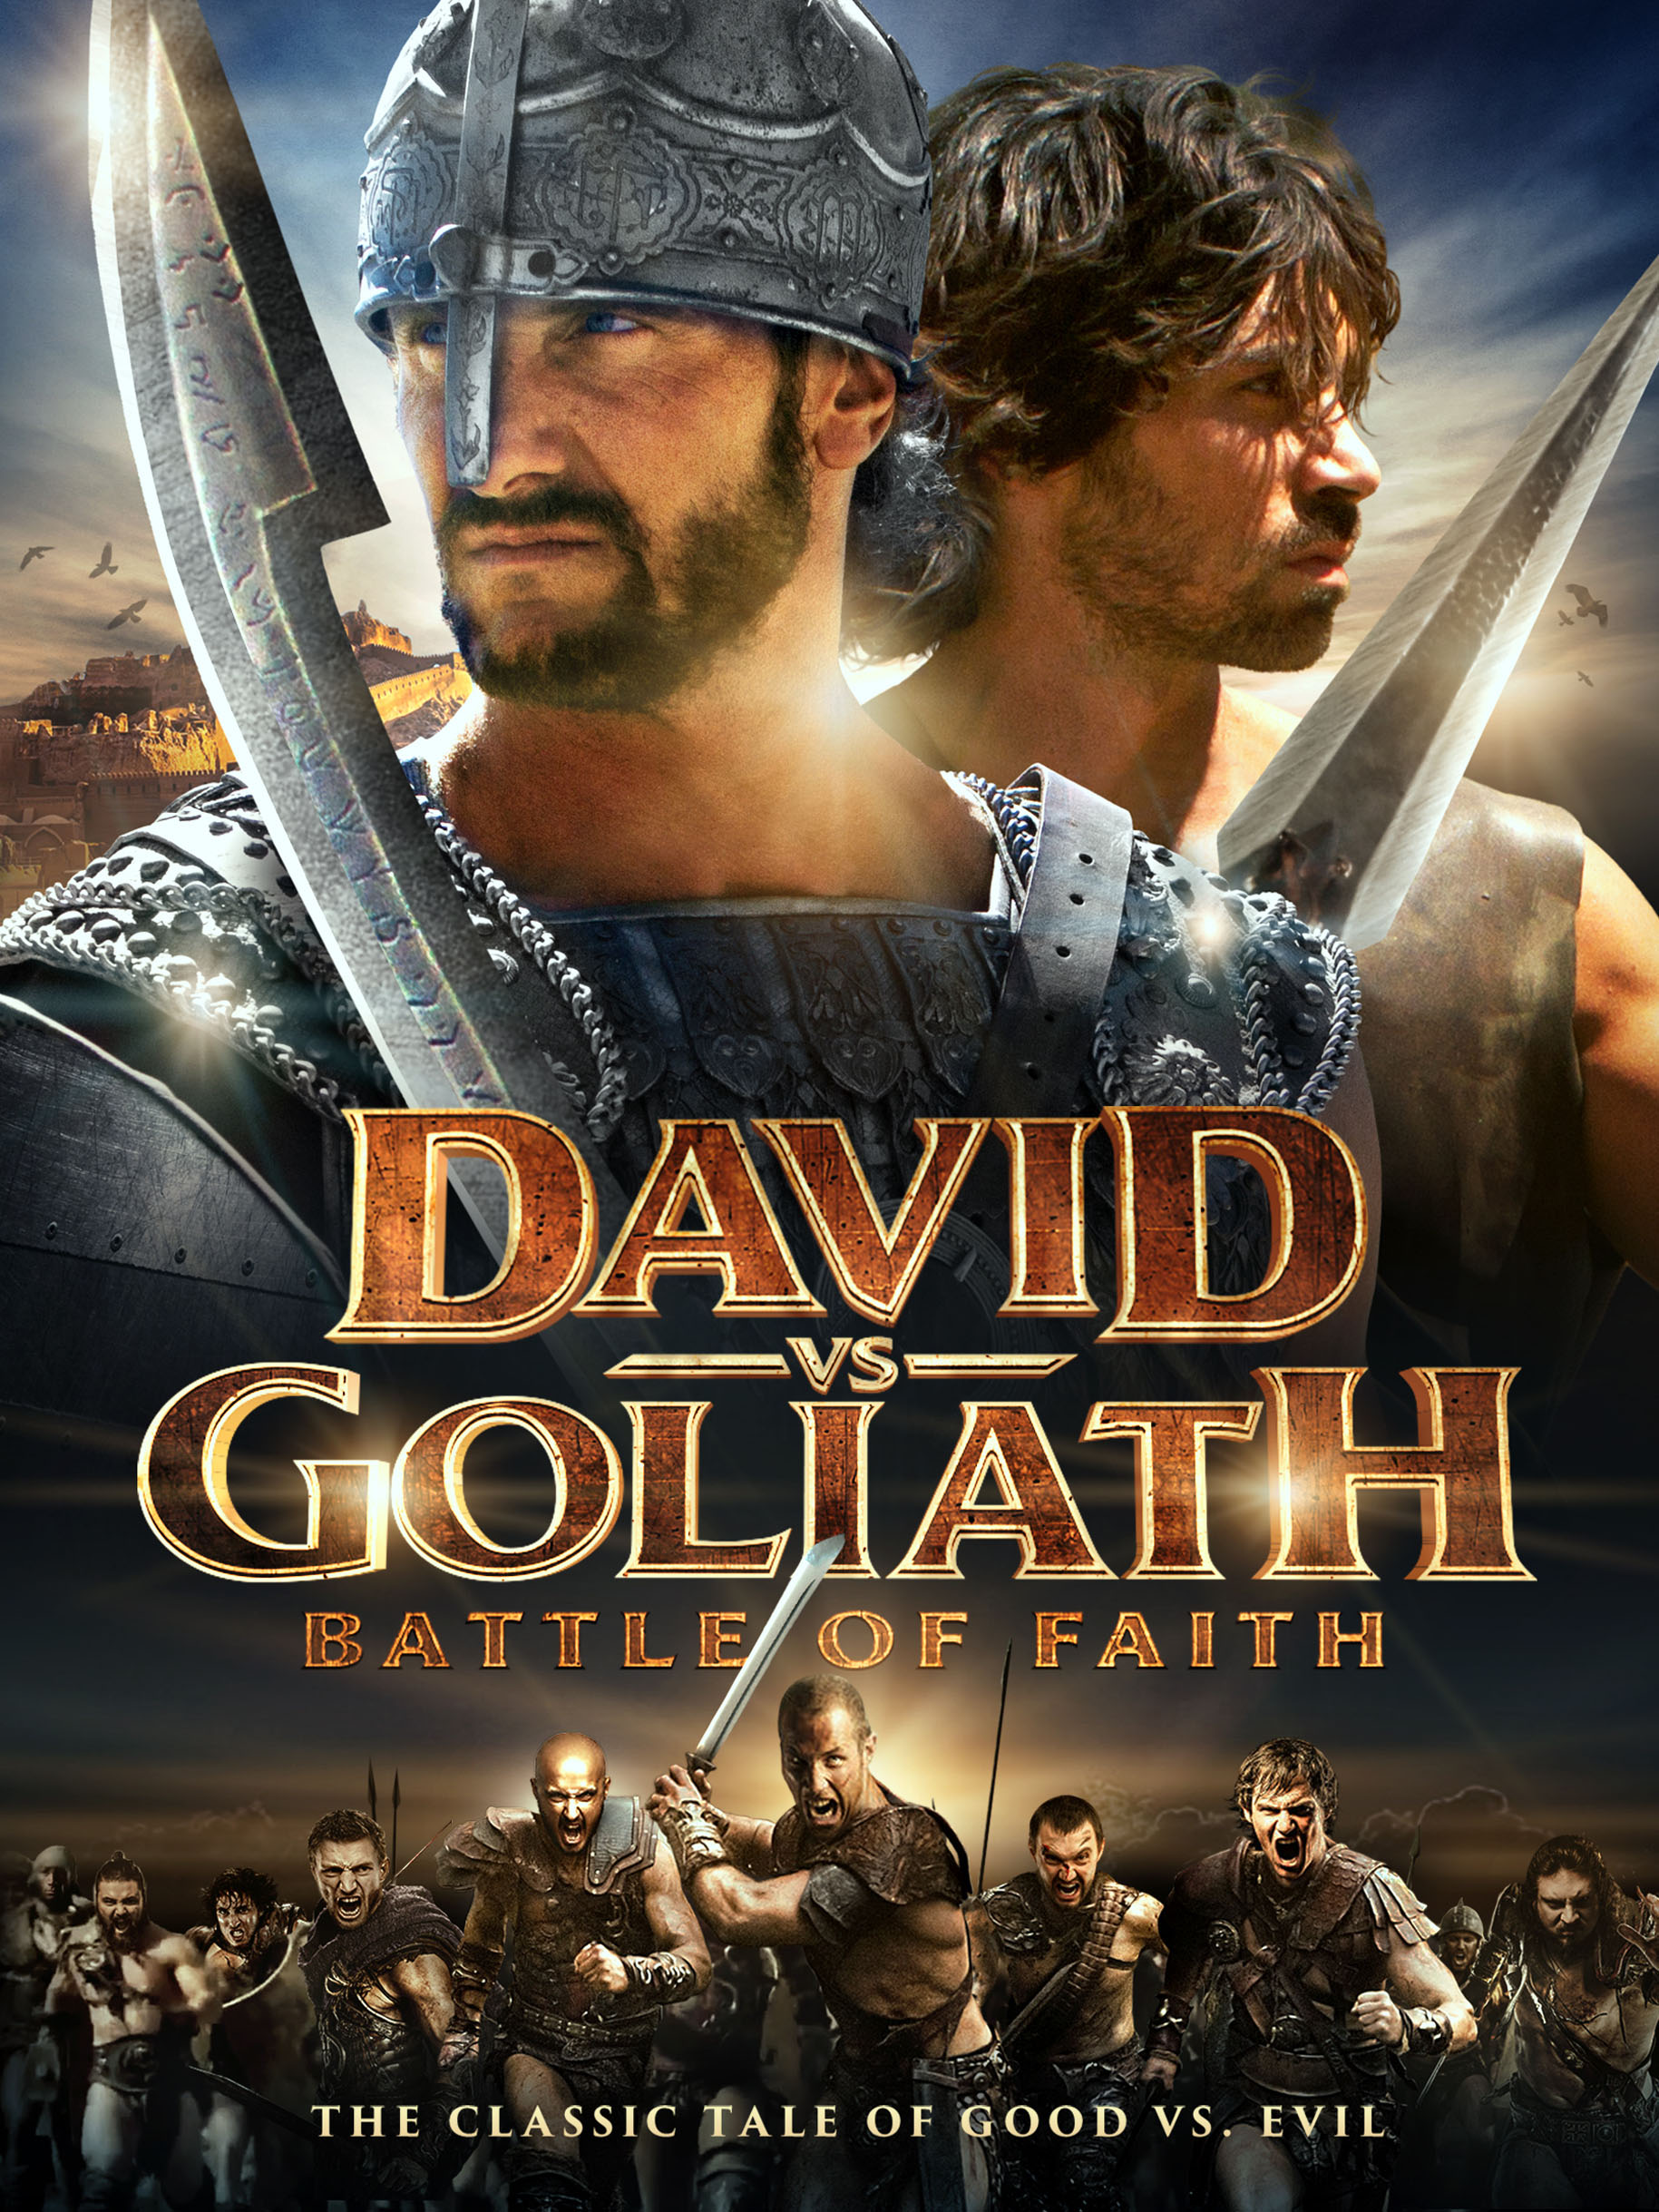 2015 David And Goliath